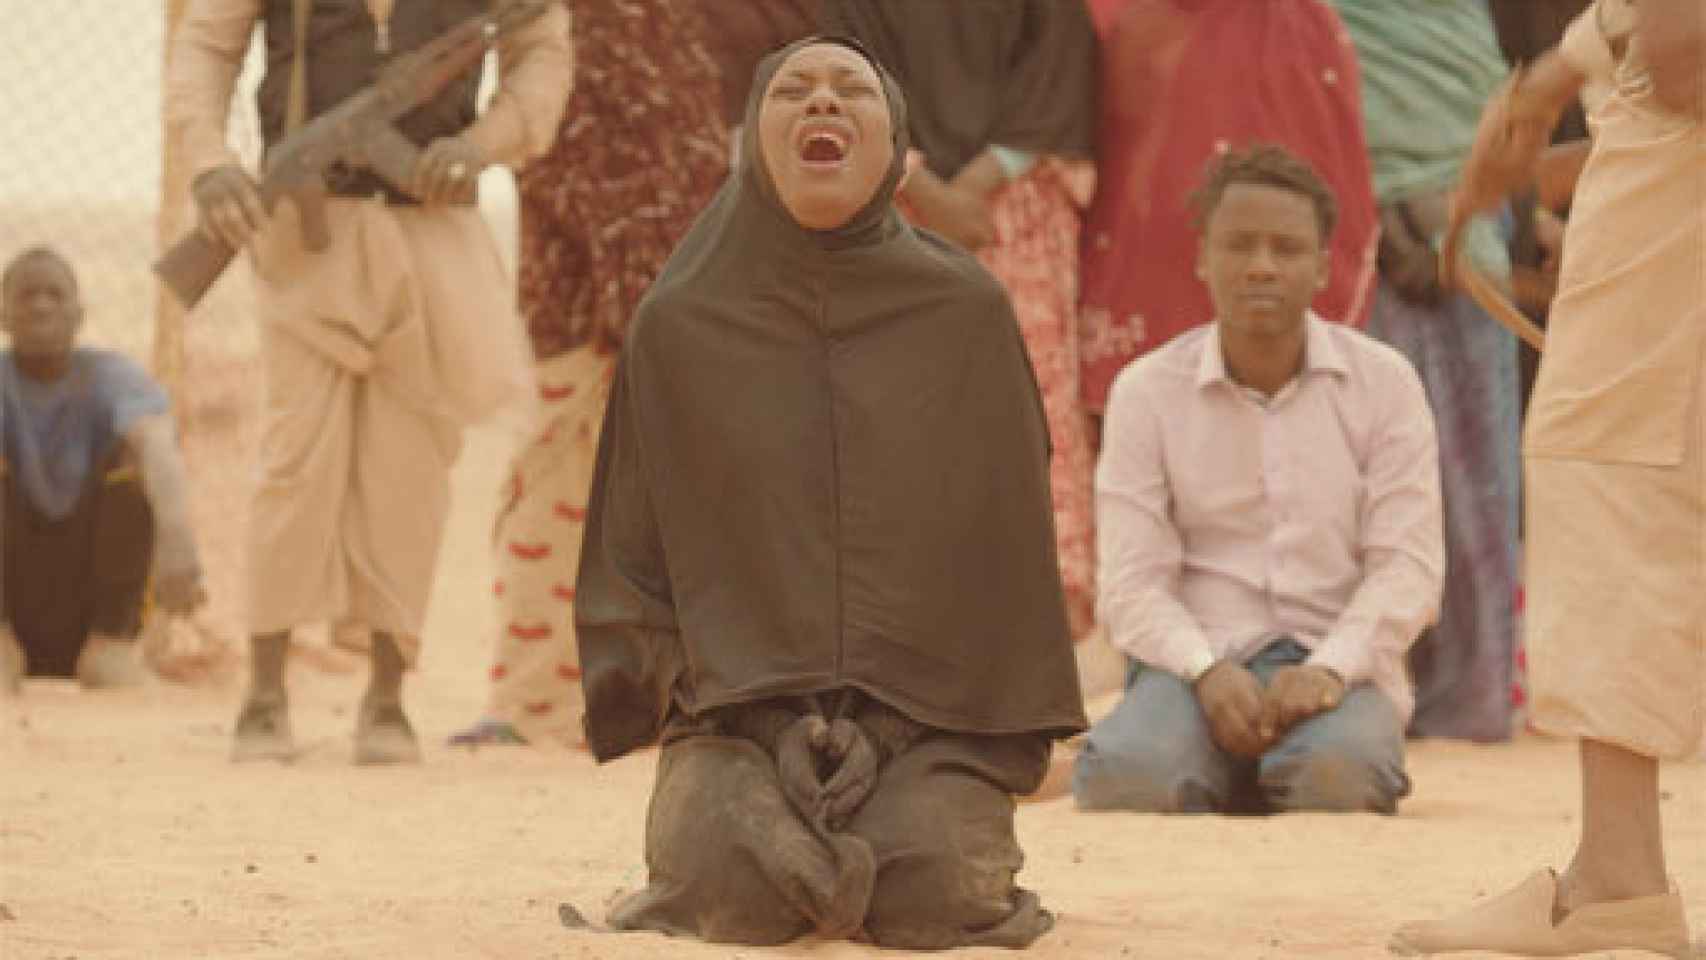 Image: Timbuktu: la crueldad del absurdo islamista